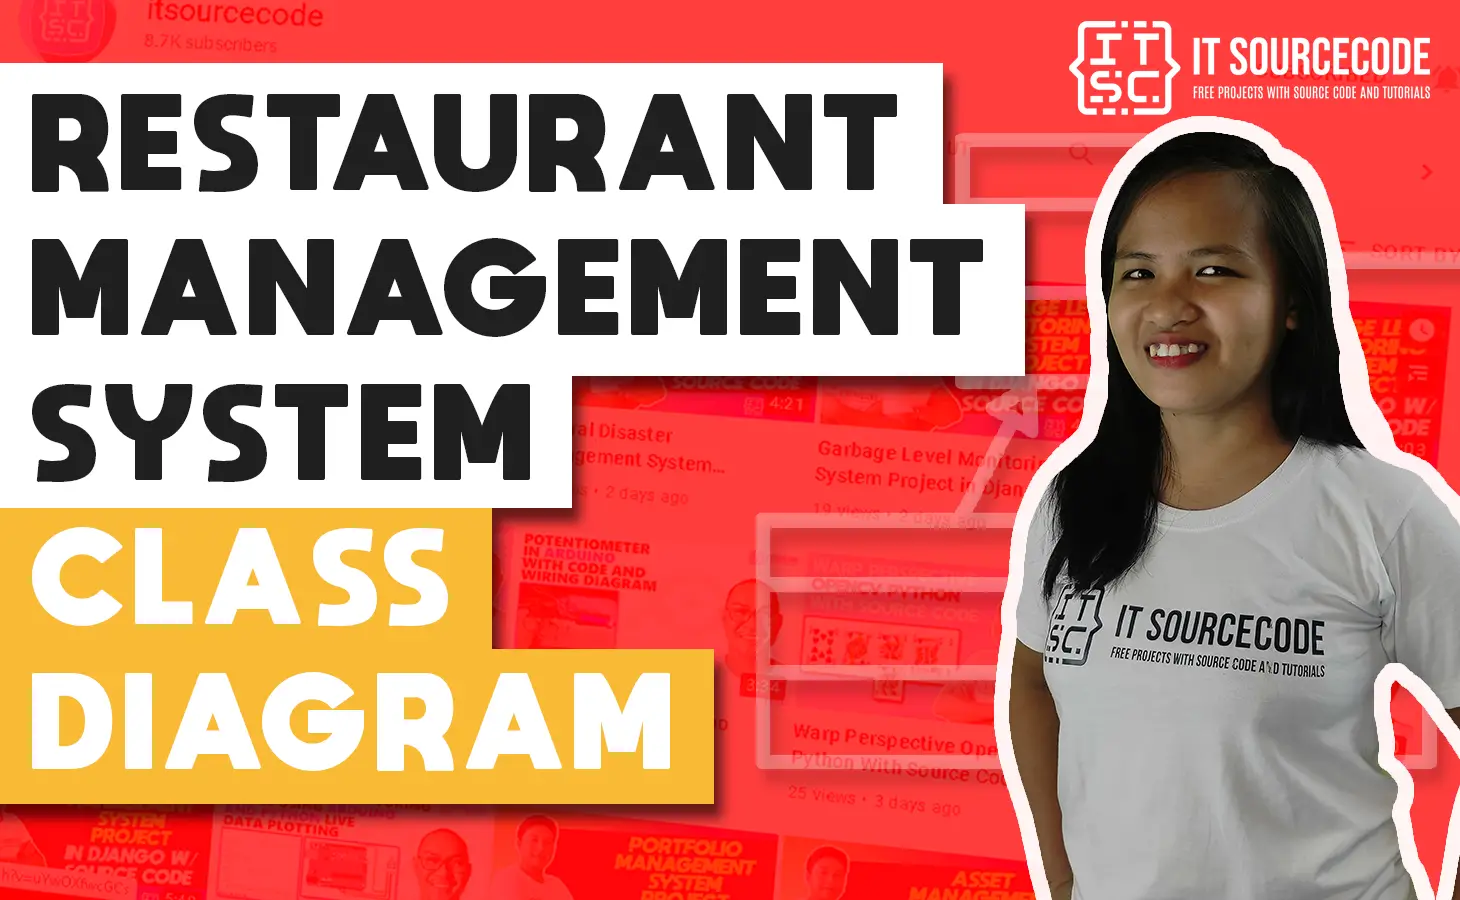 Restaurant Management System Class Diagram